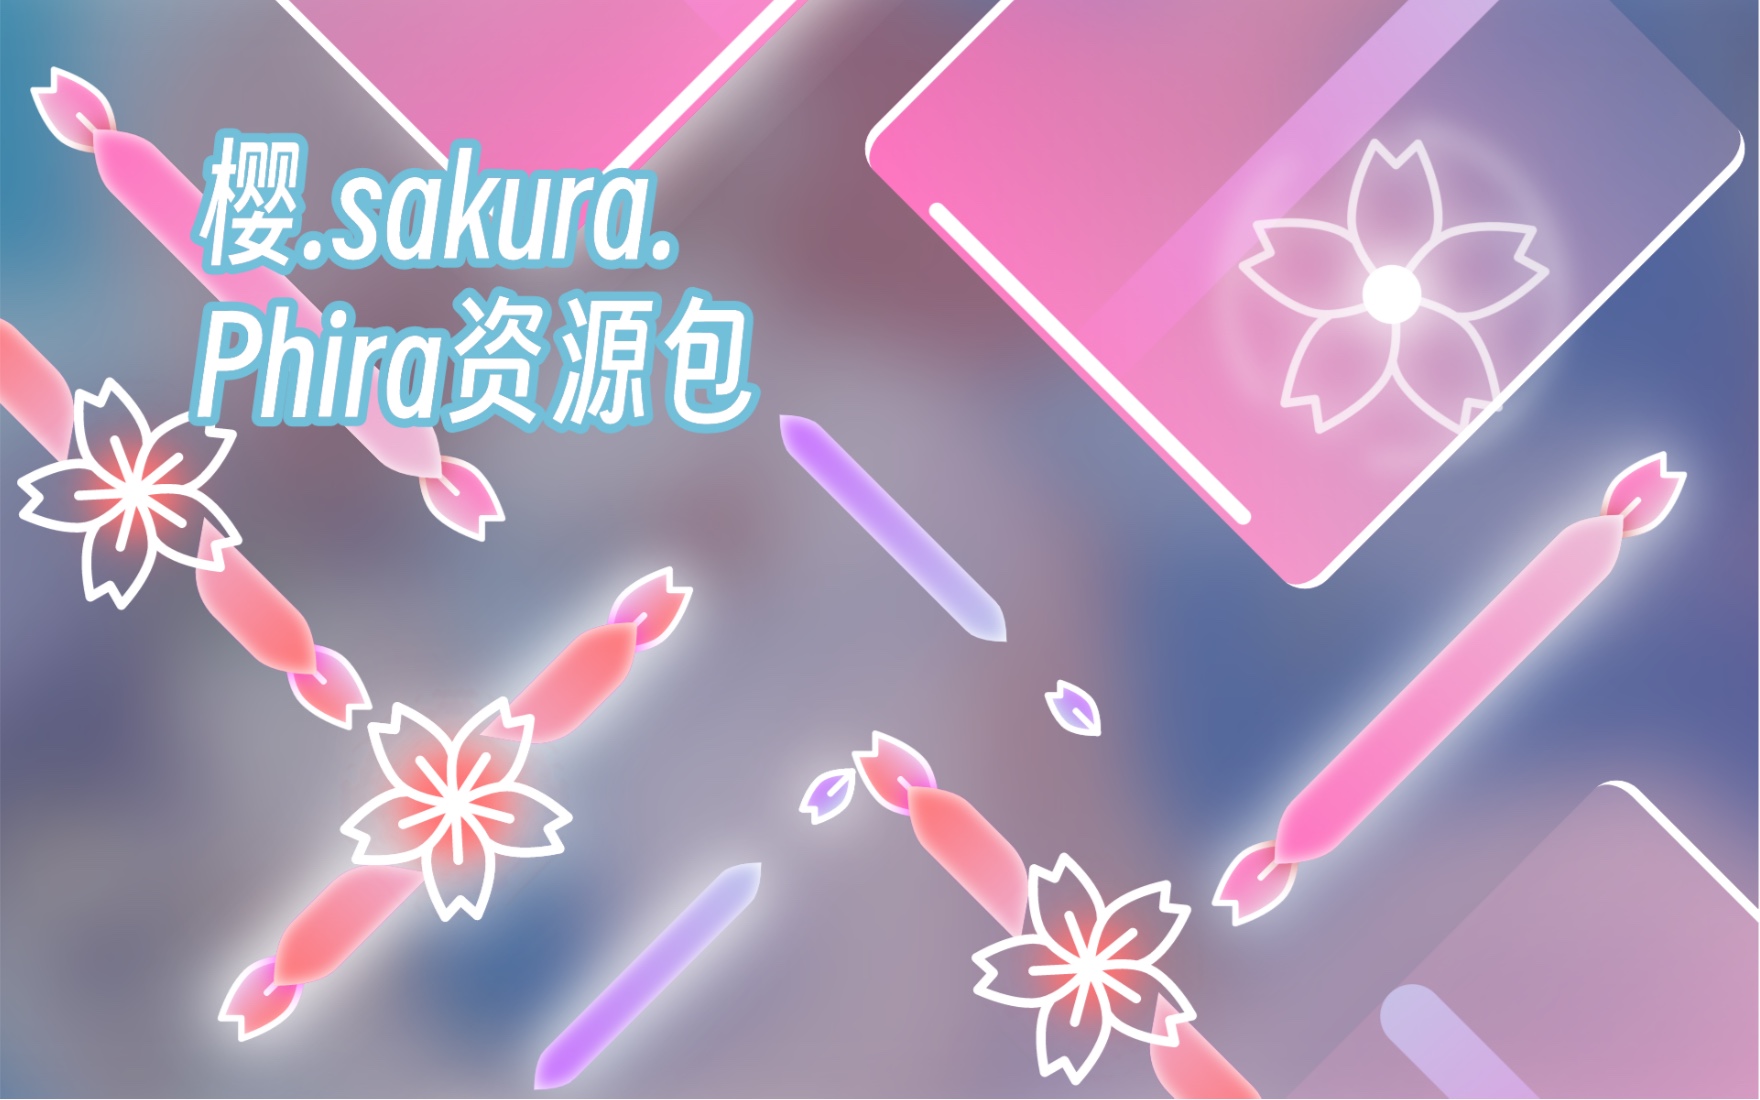 【Phigros二创/Phira】「樱.sakura.」自制皮肤资源包